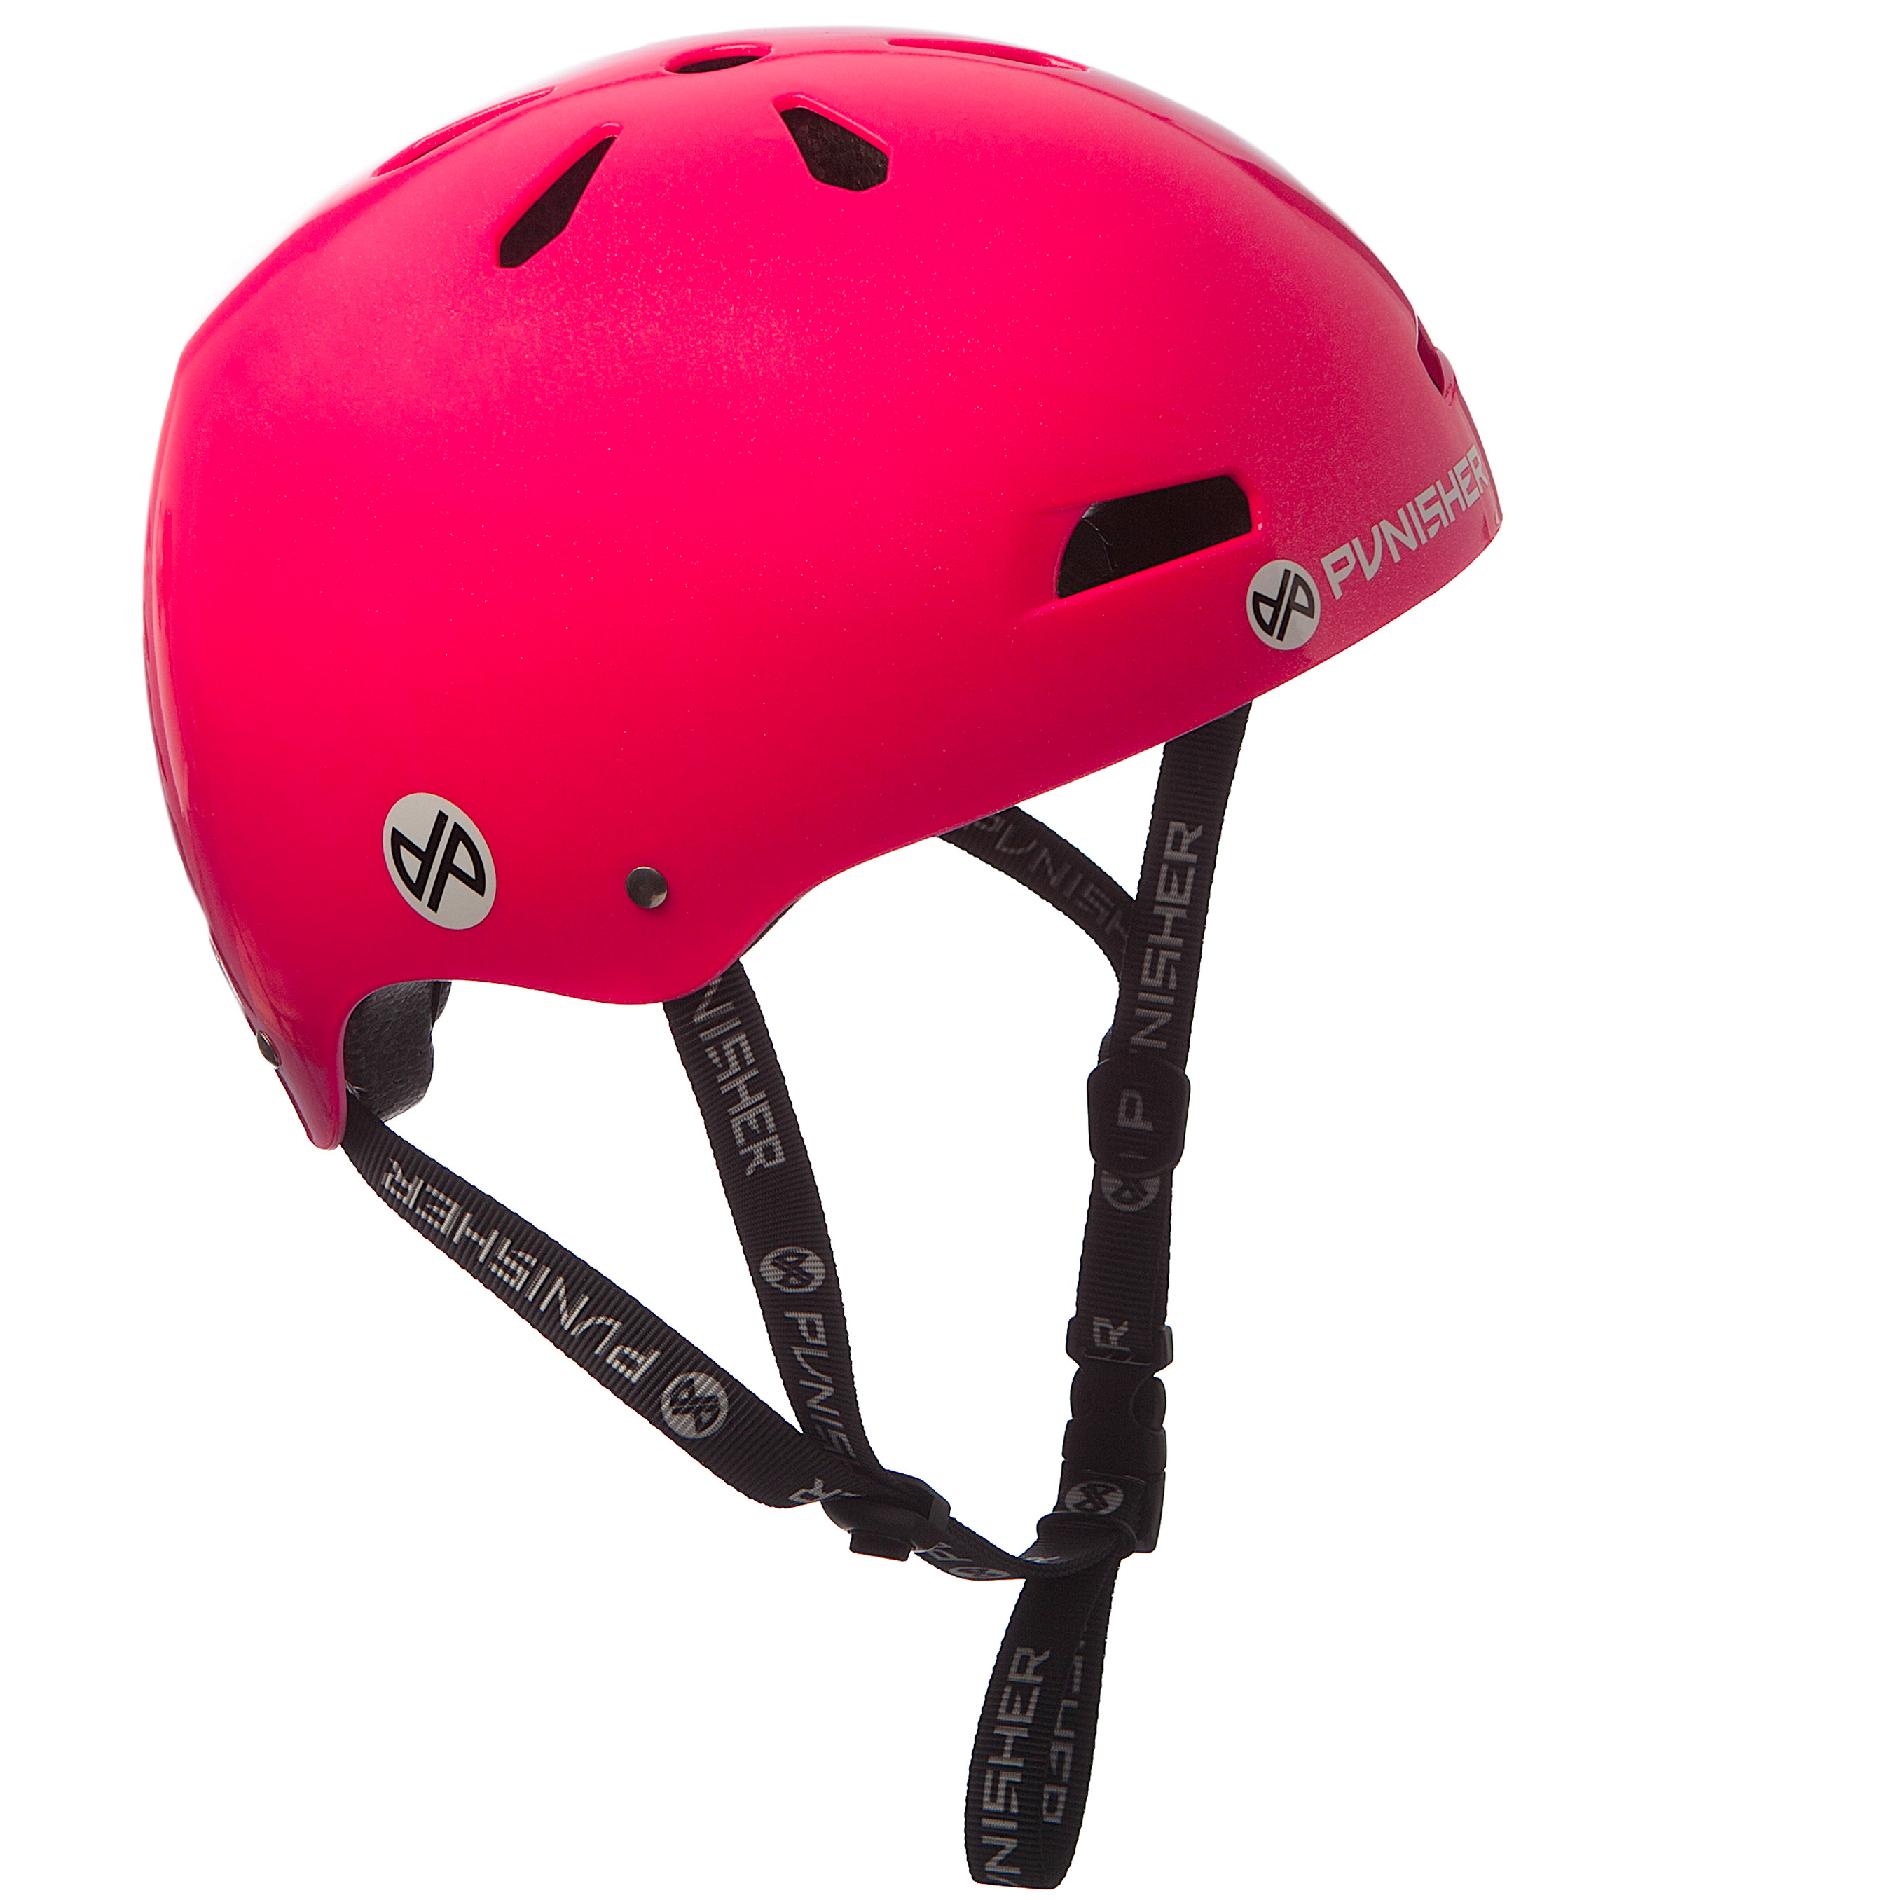 Punisher Skateboards Youth 13-vent Metallic Flake Neon Hot Pink Dual Safety Certified BMX Bike and Skateboard Helmet, Size Medium